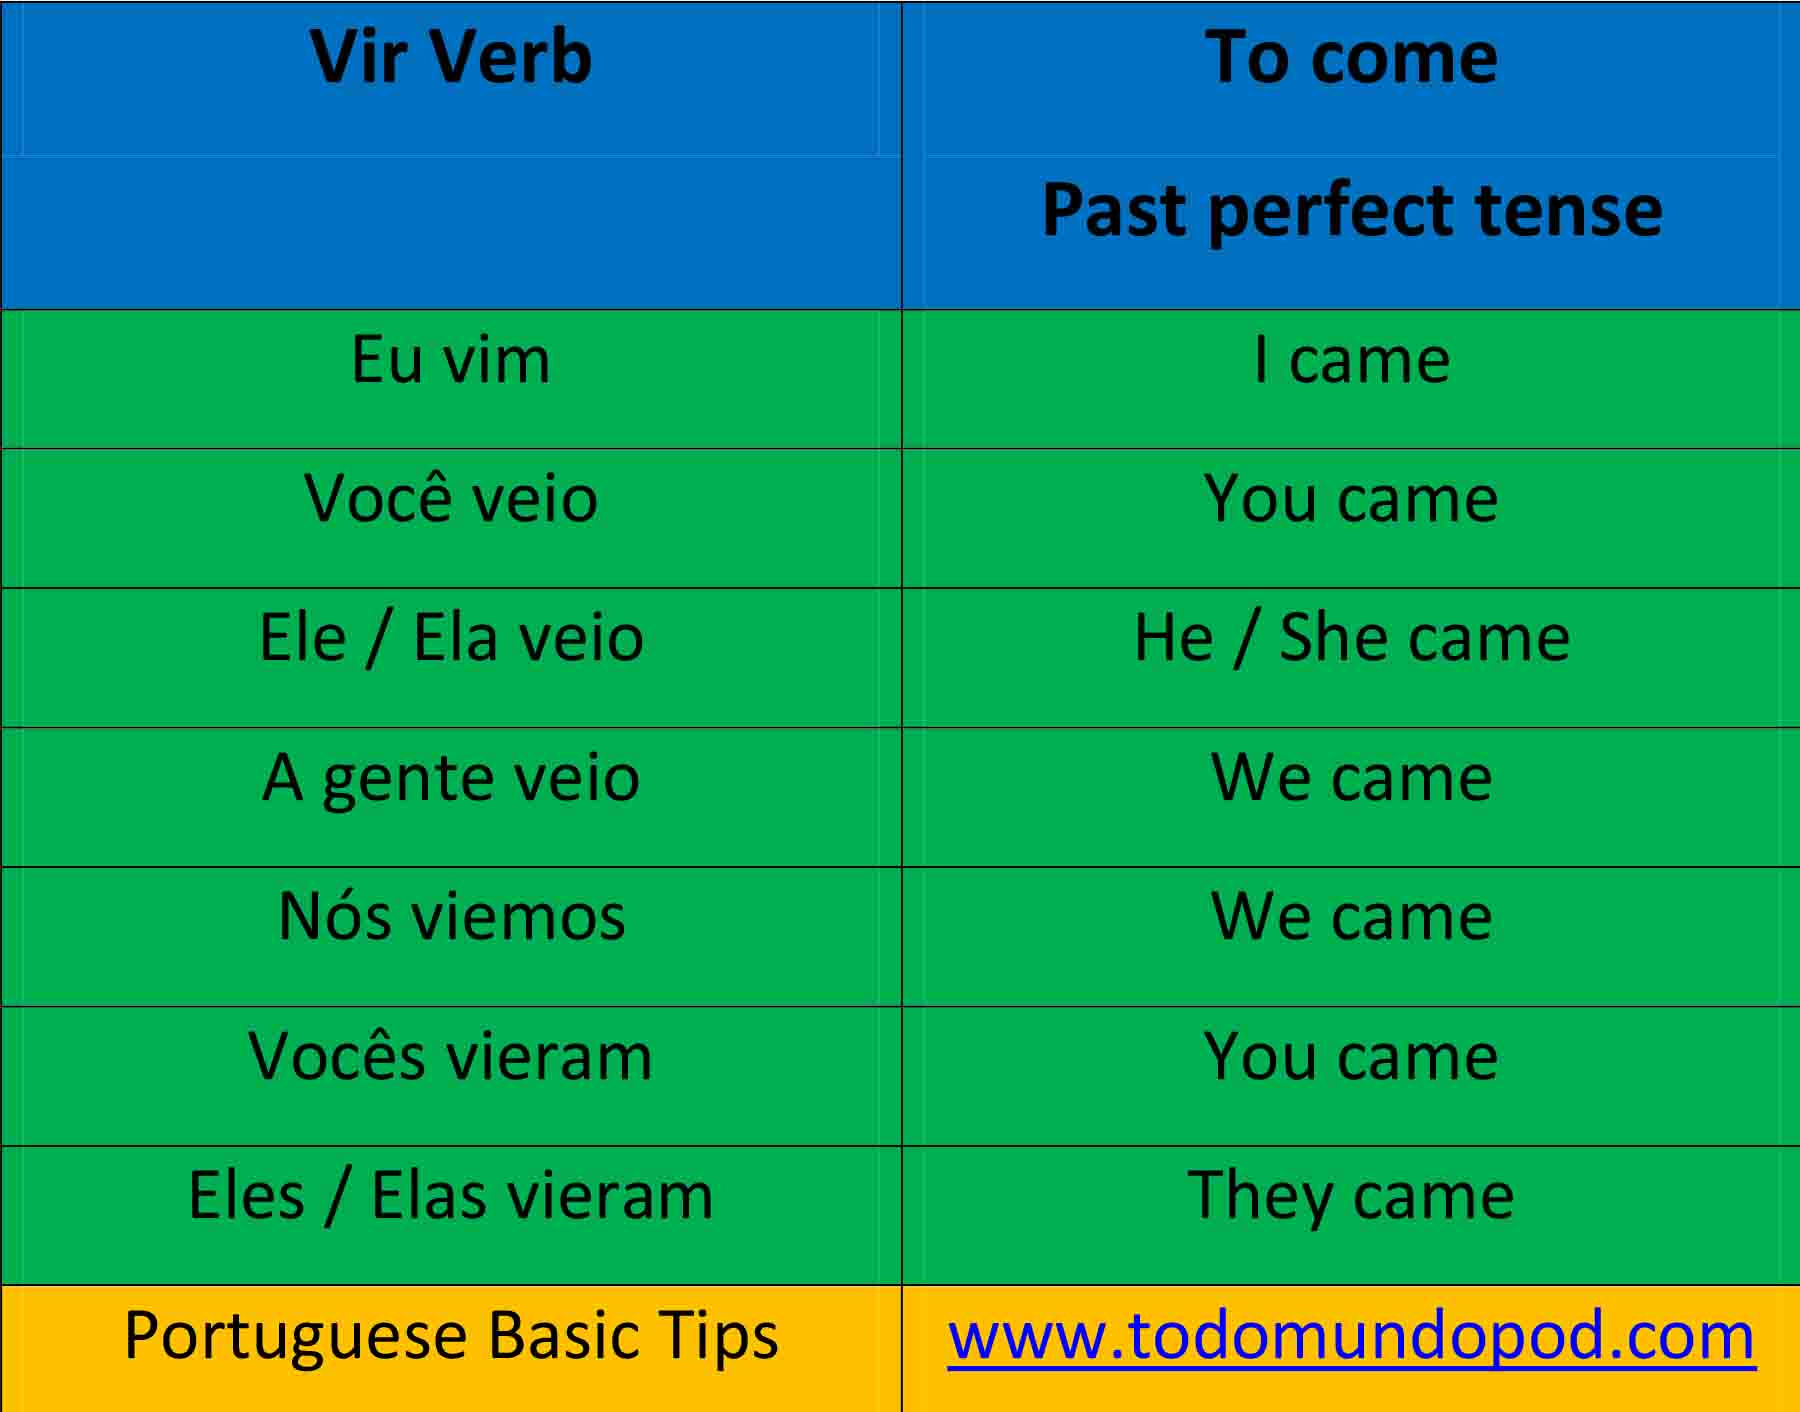 Vir verb conjugation in Portuguese - past perfect tense